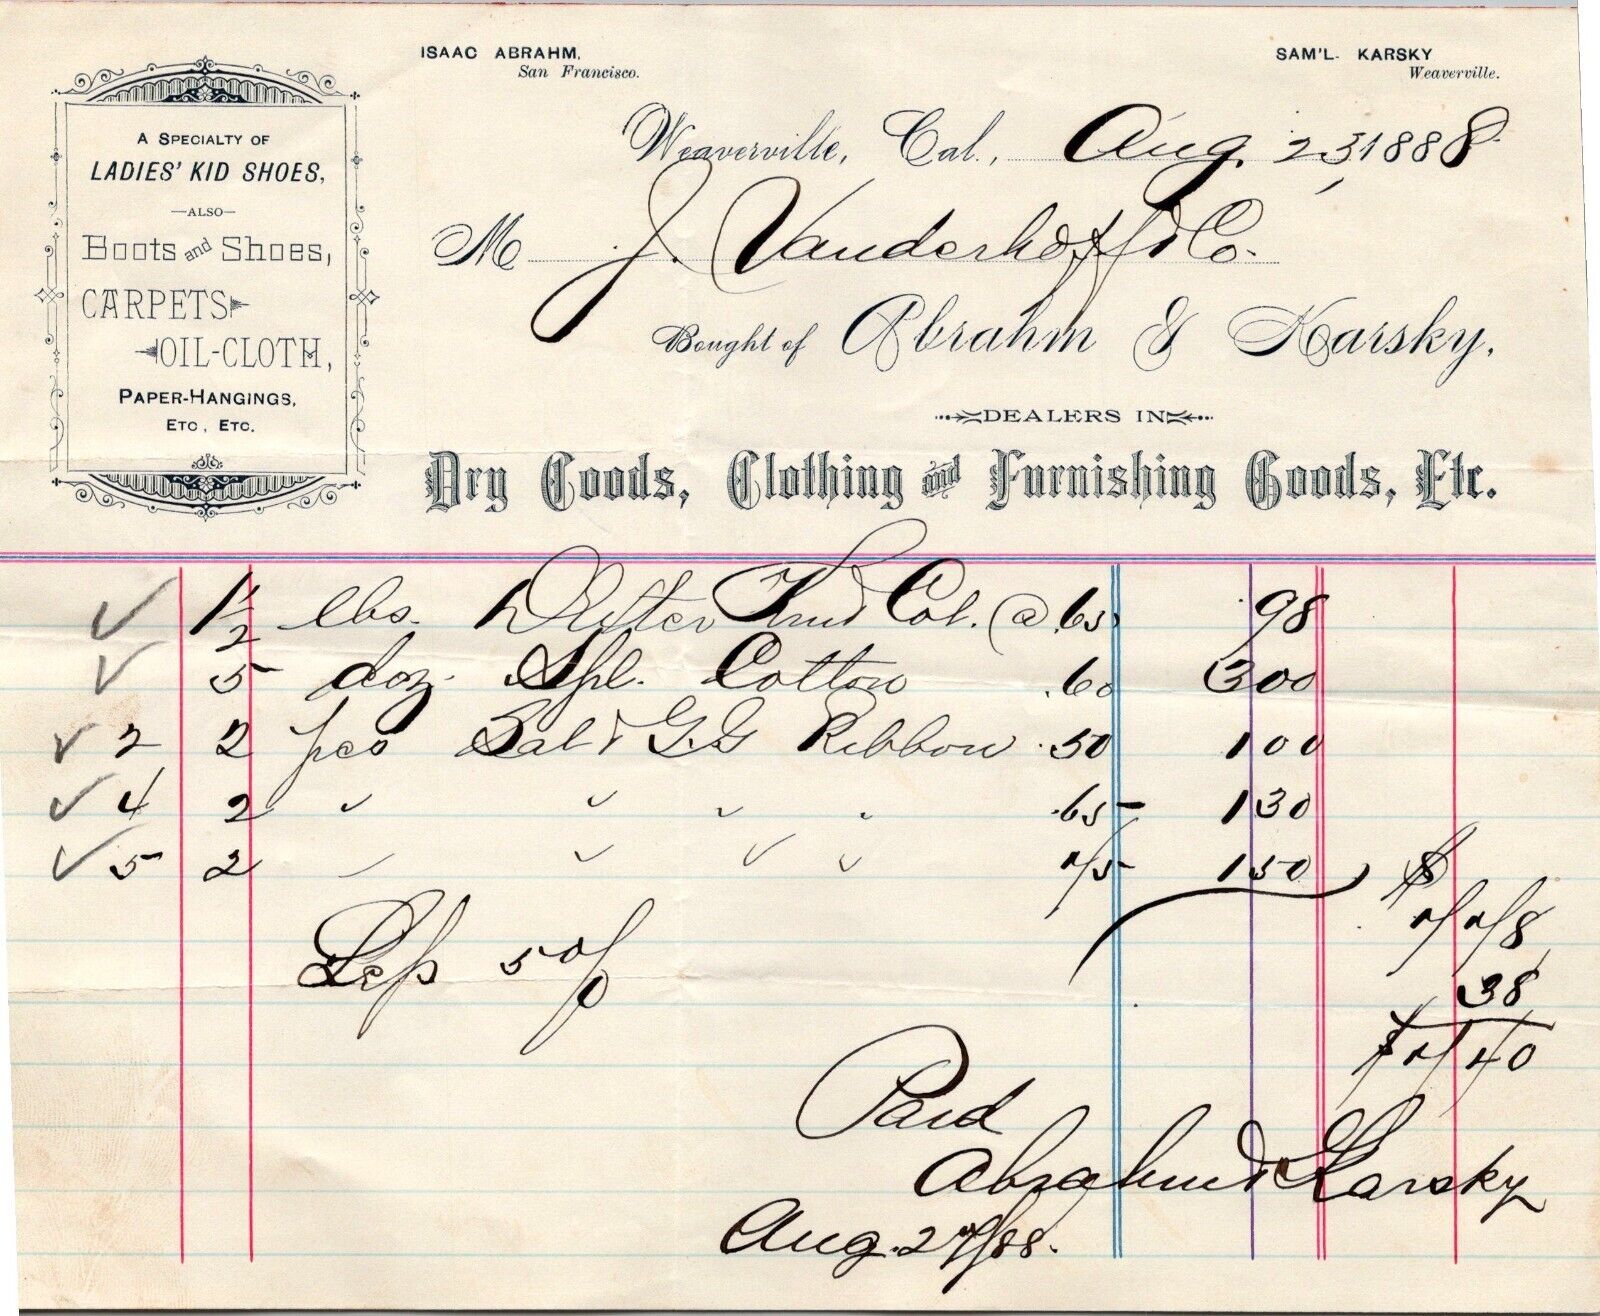 1888 Abraham & Karsky Dry Goods Clothing Furnishing Goods Boots WEAVERSVILLE CA